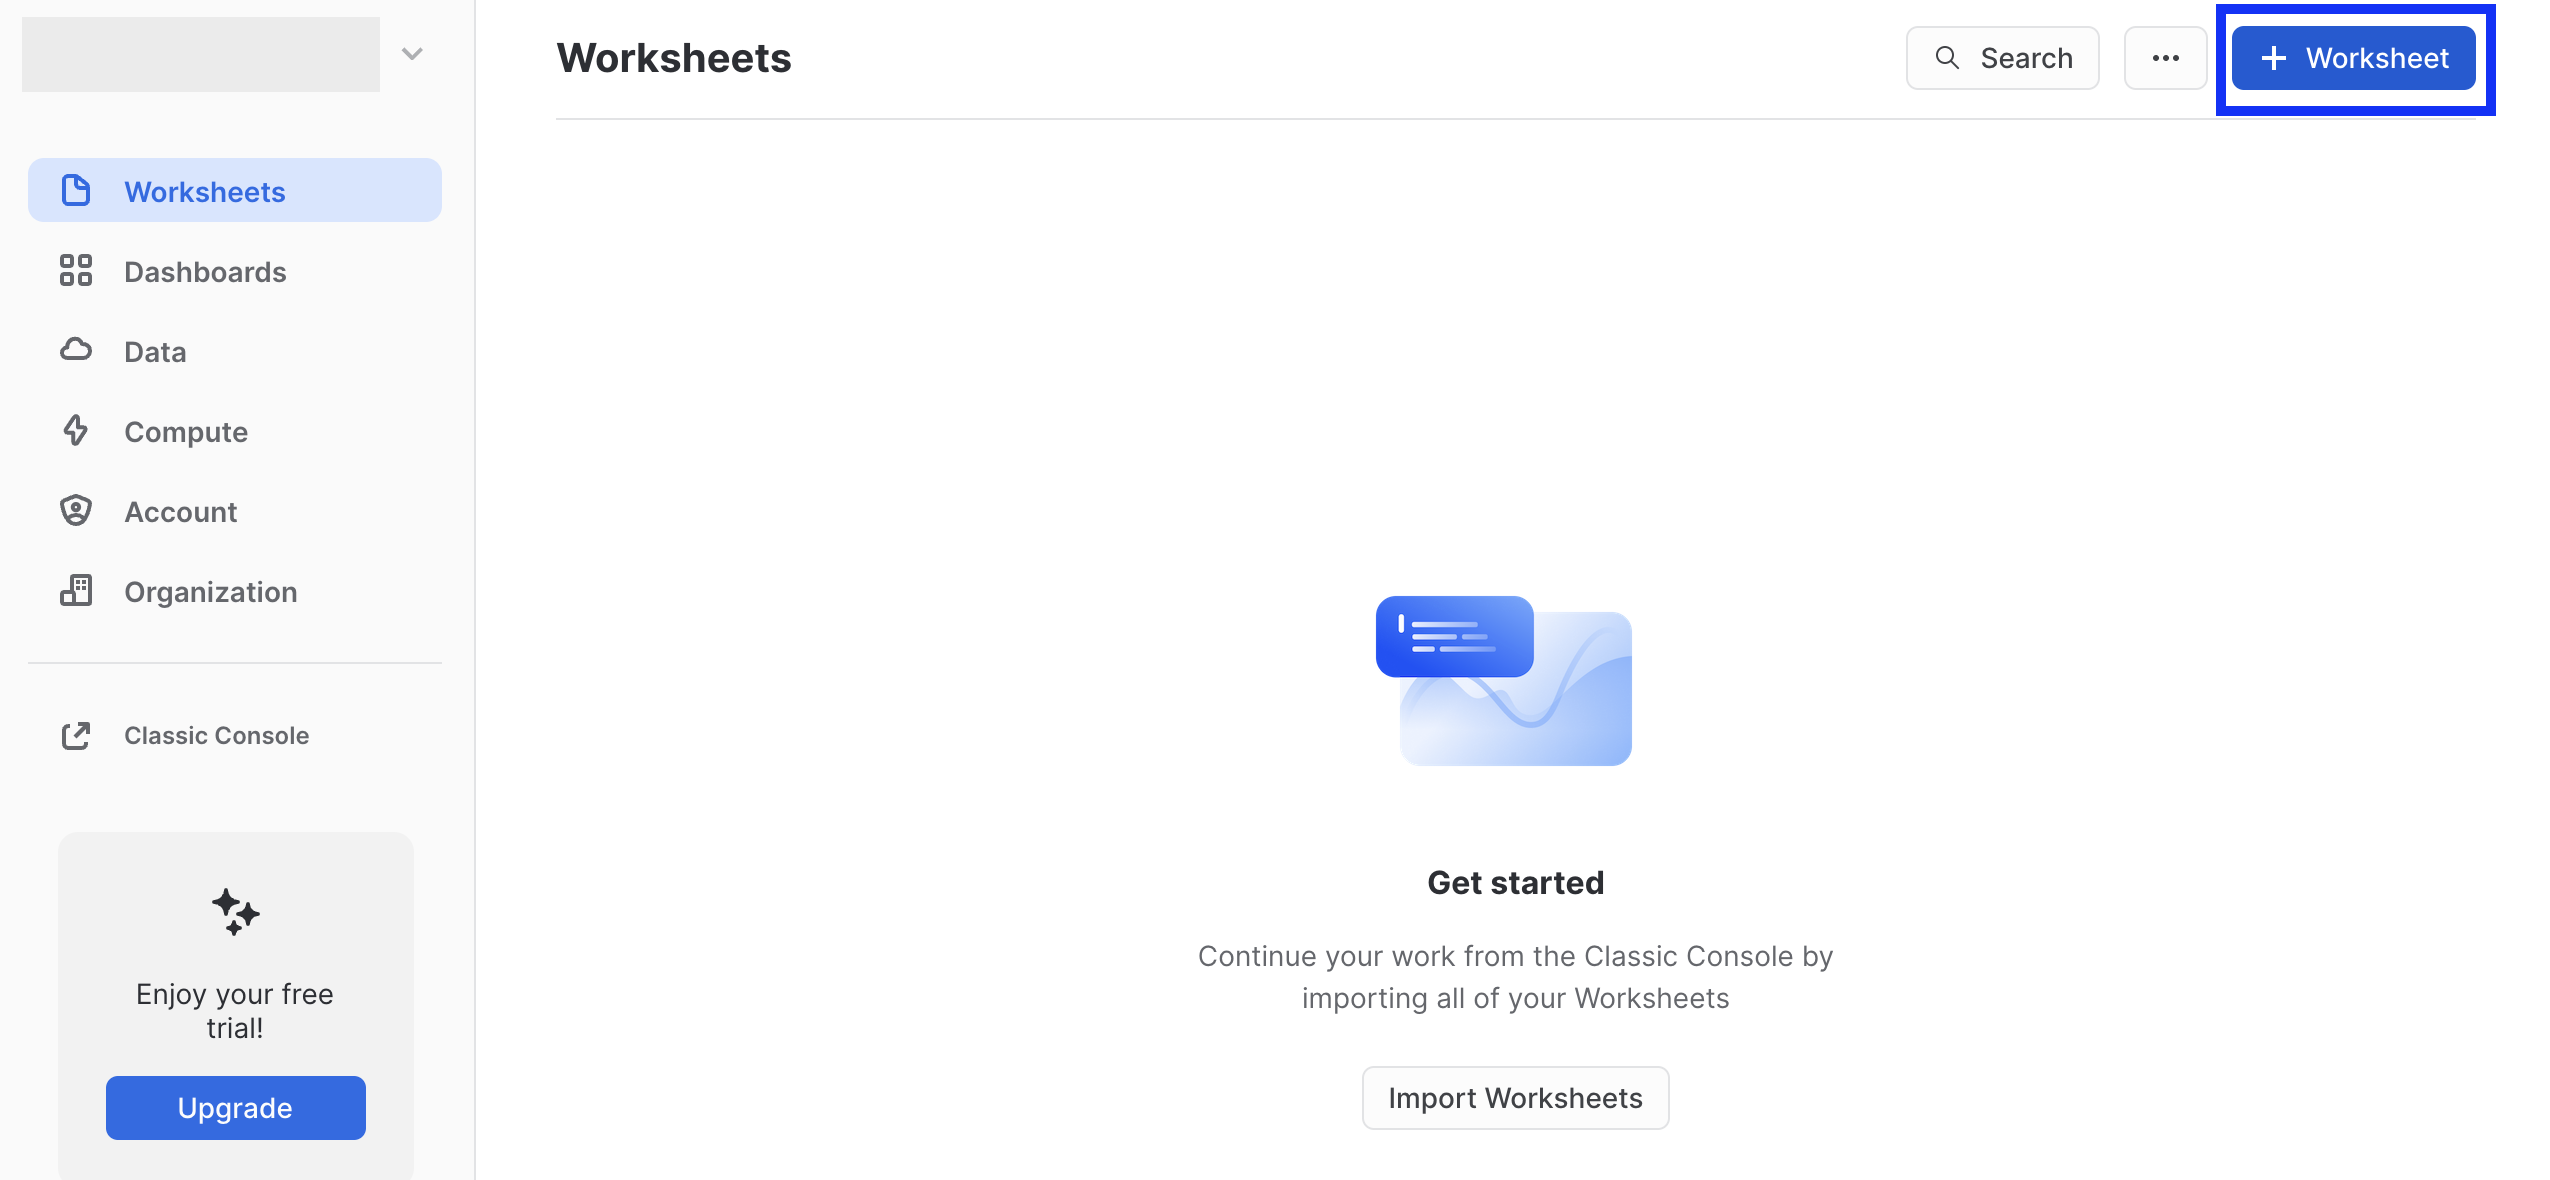 Snowflake New UI - Create New Worksheet